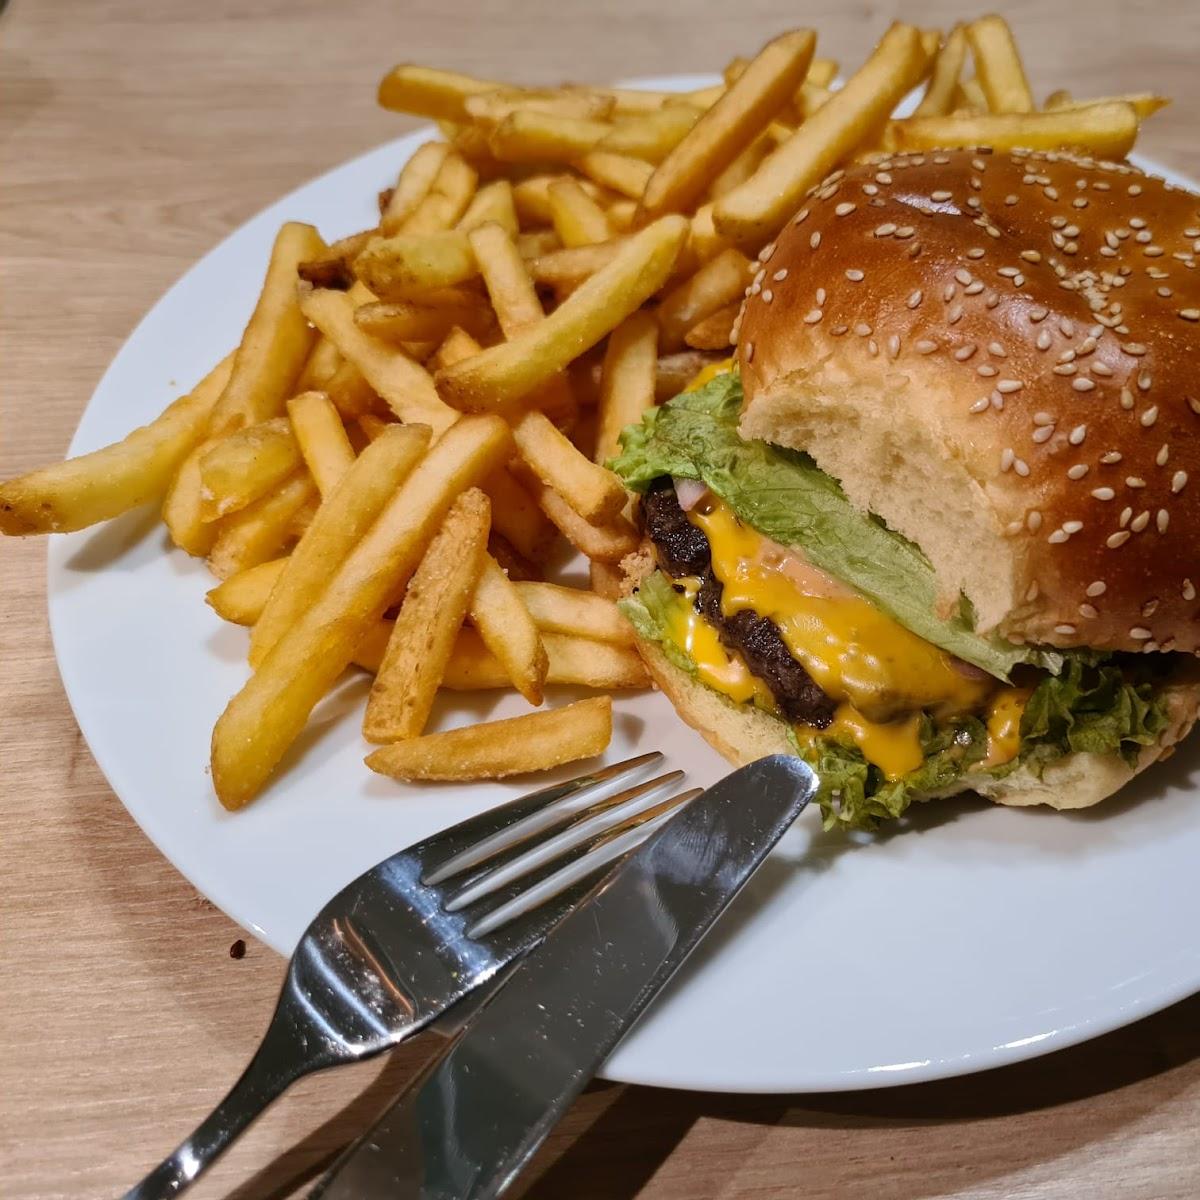 Restaurant "Affenfelsen Burger" in Neumünster